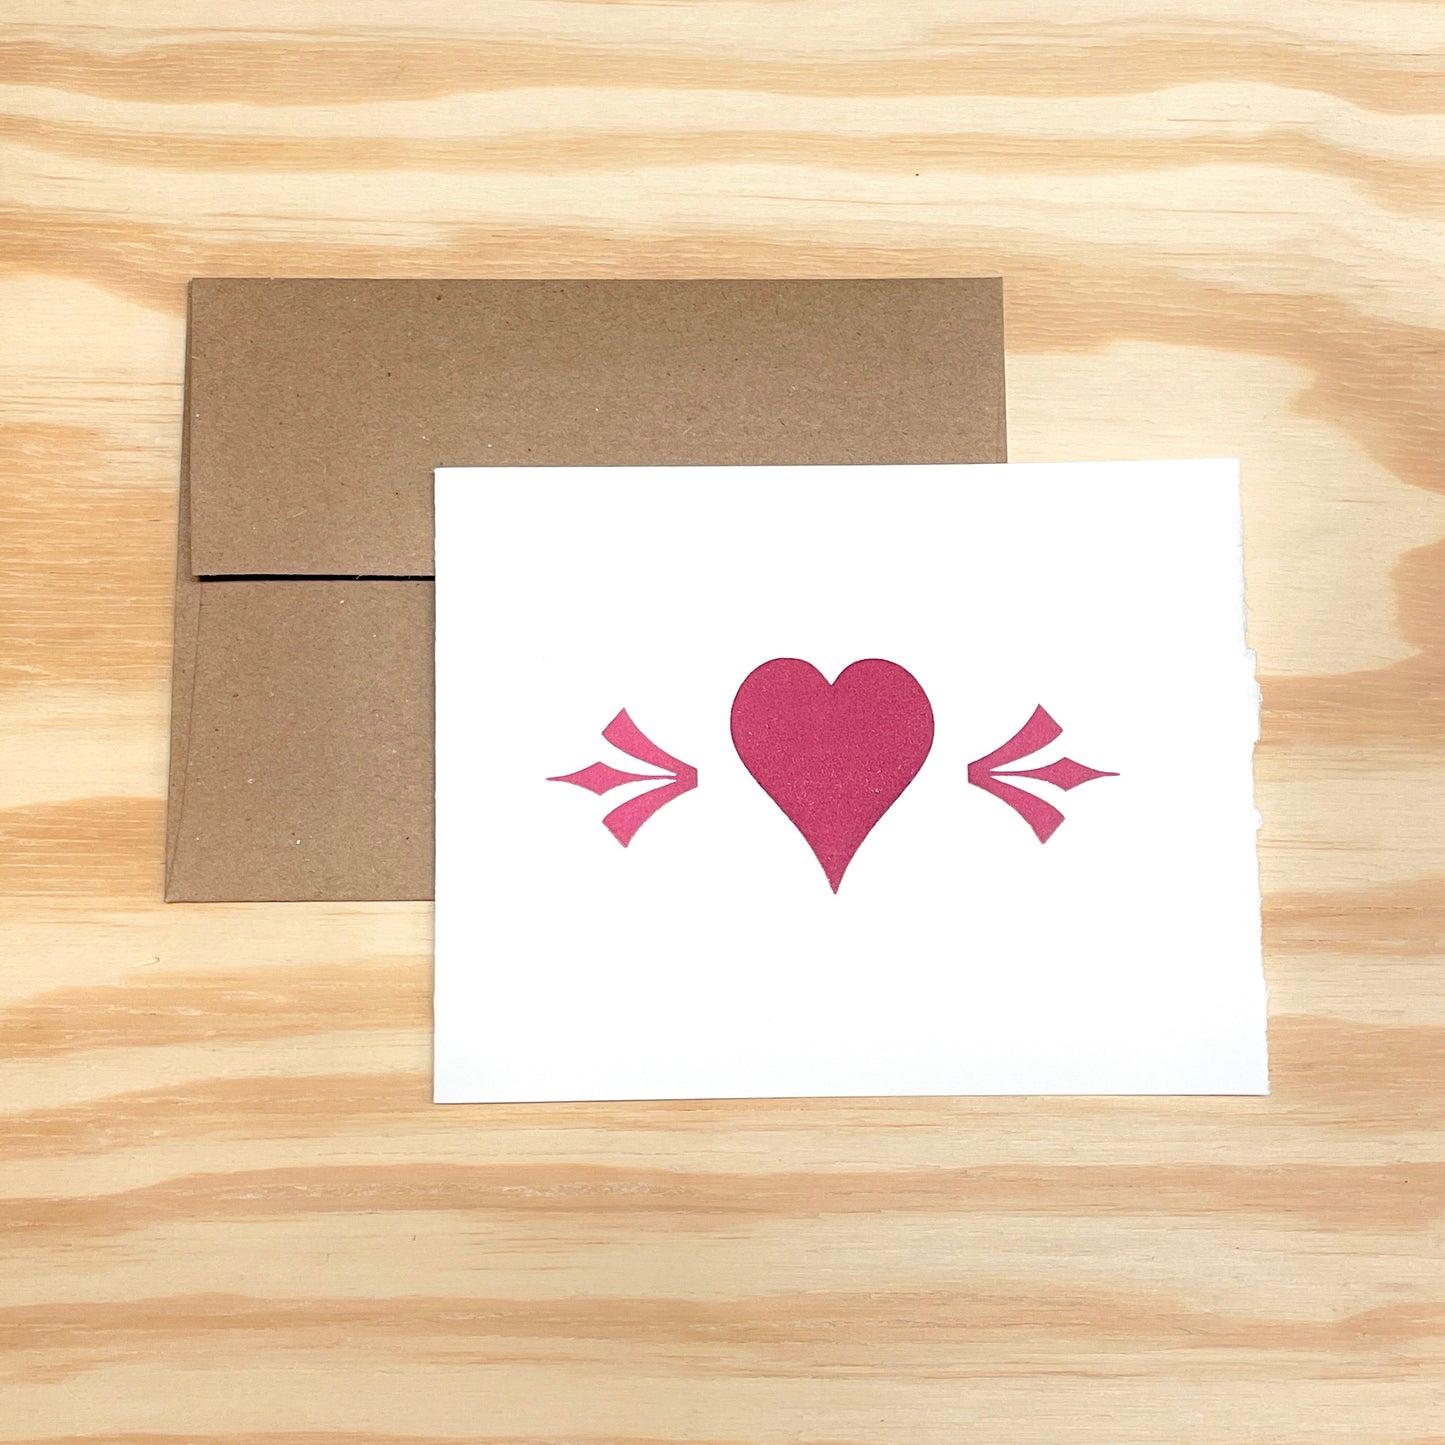 Heart Pointers - single card - wood type letterpress printed